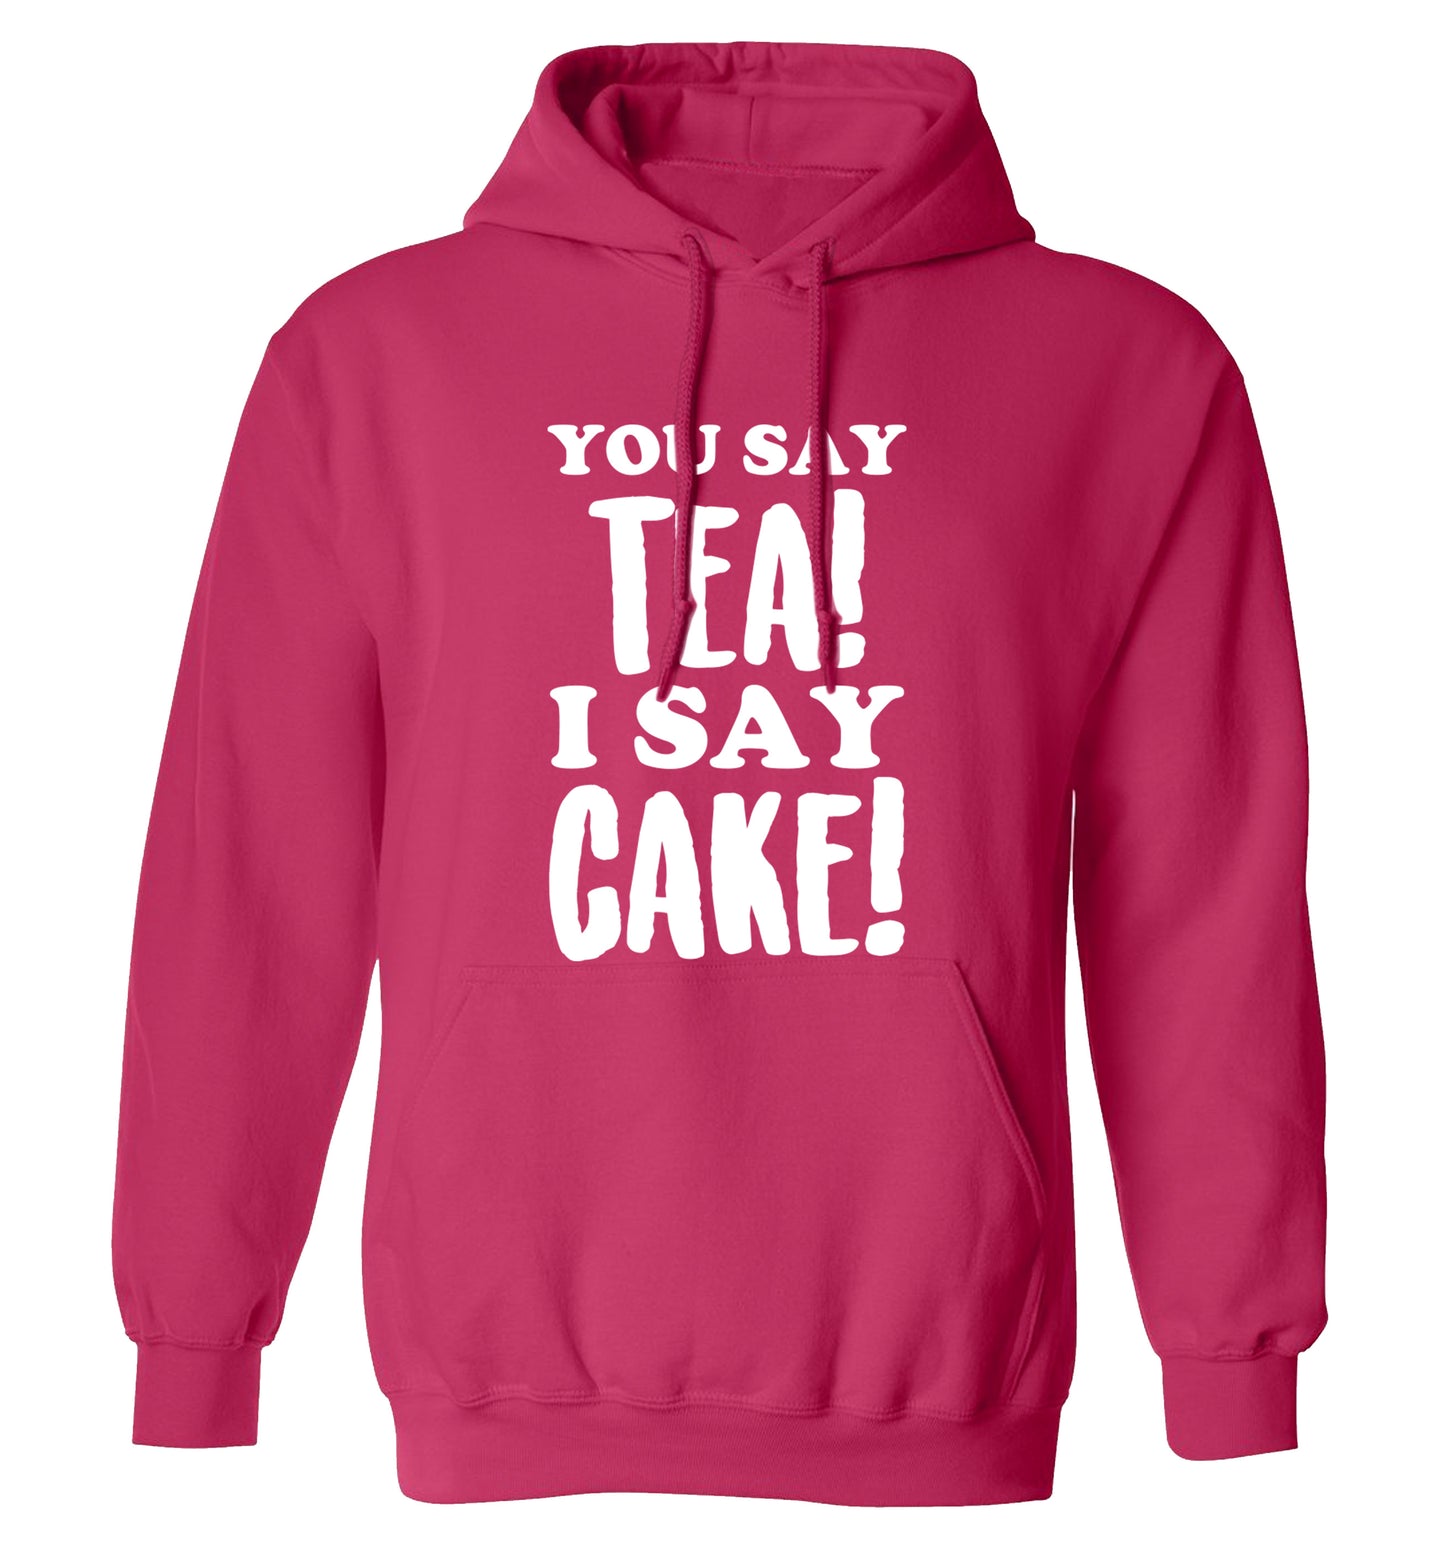 You say tea I say cake! adults unisex pink hoodie 2XL